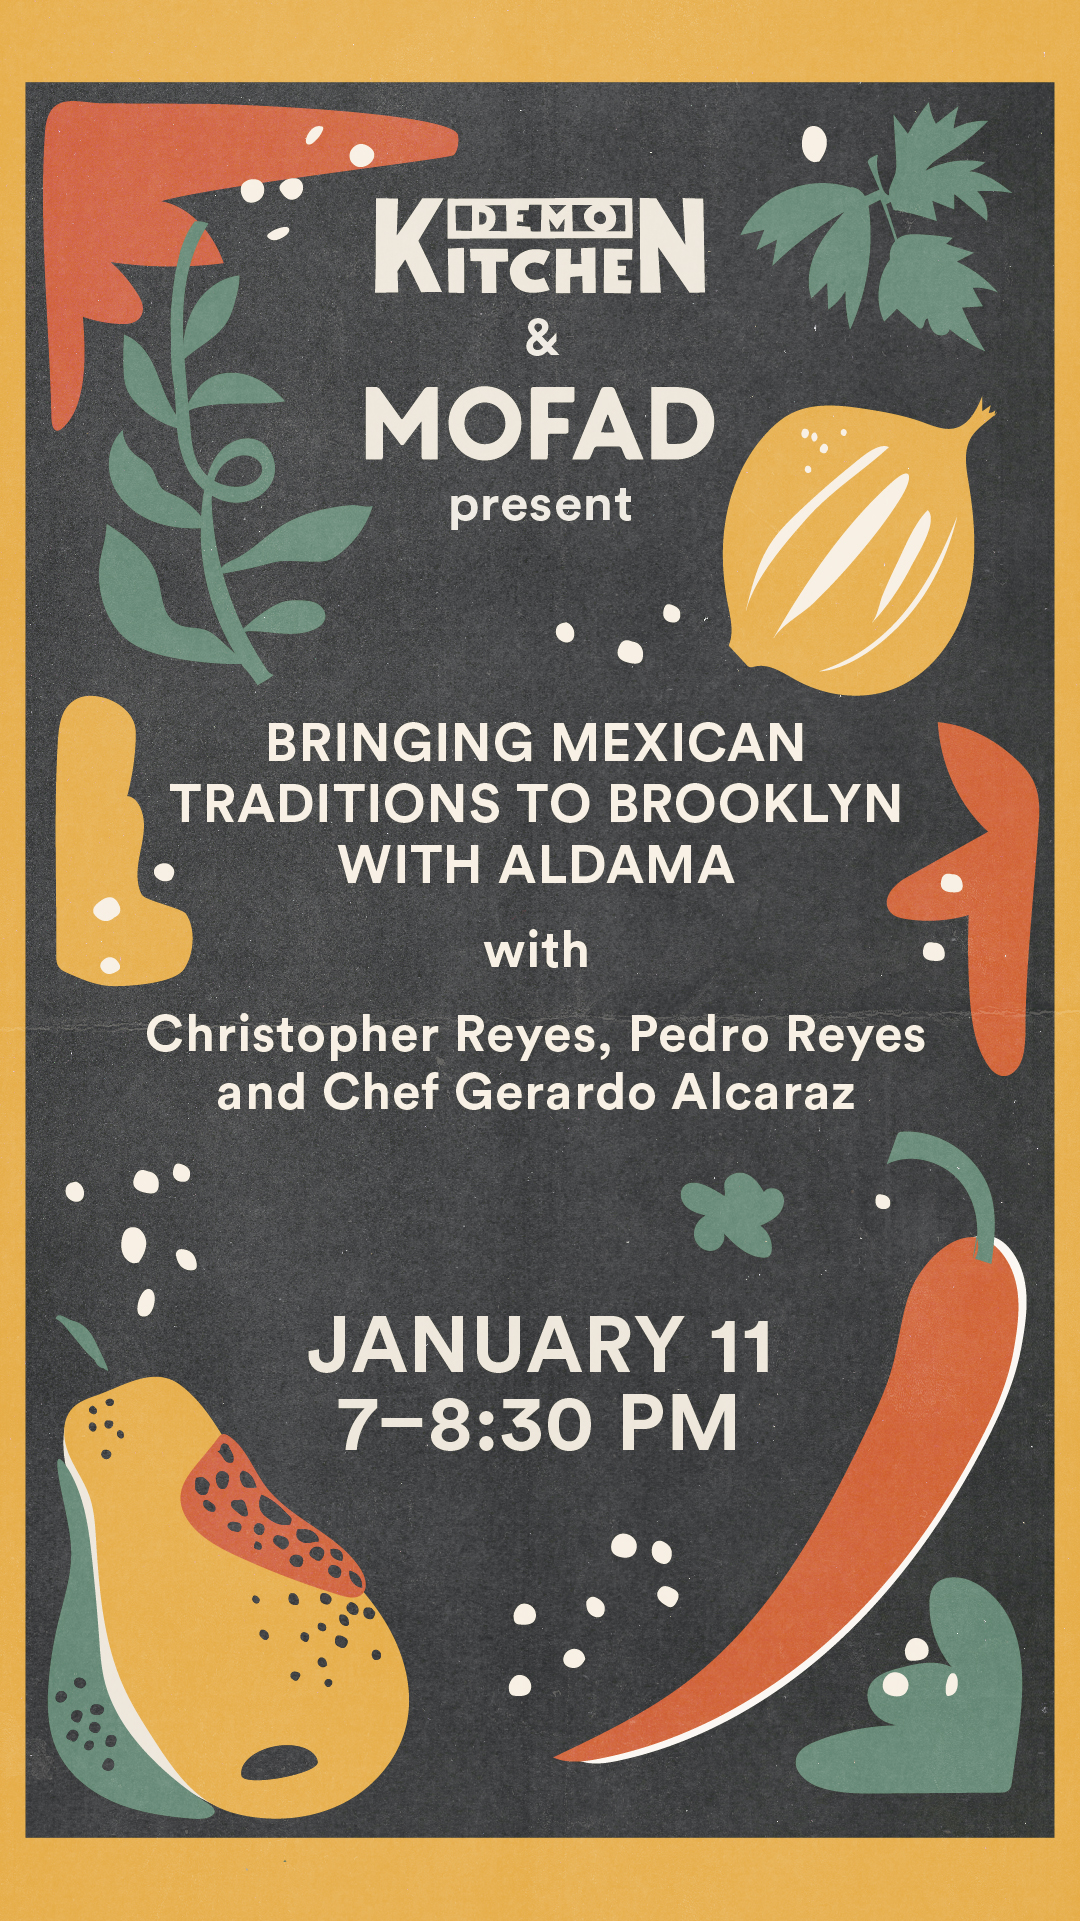 Demo Kitchen & MOFAD event promo - January 11